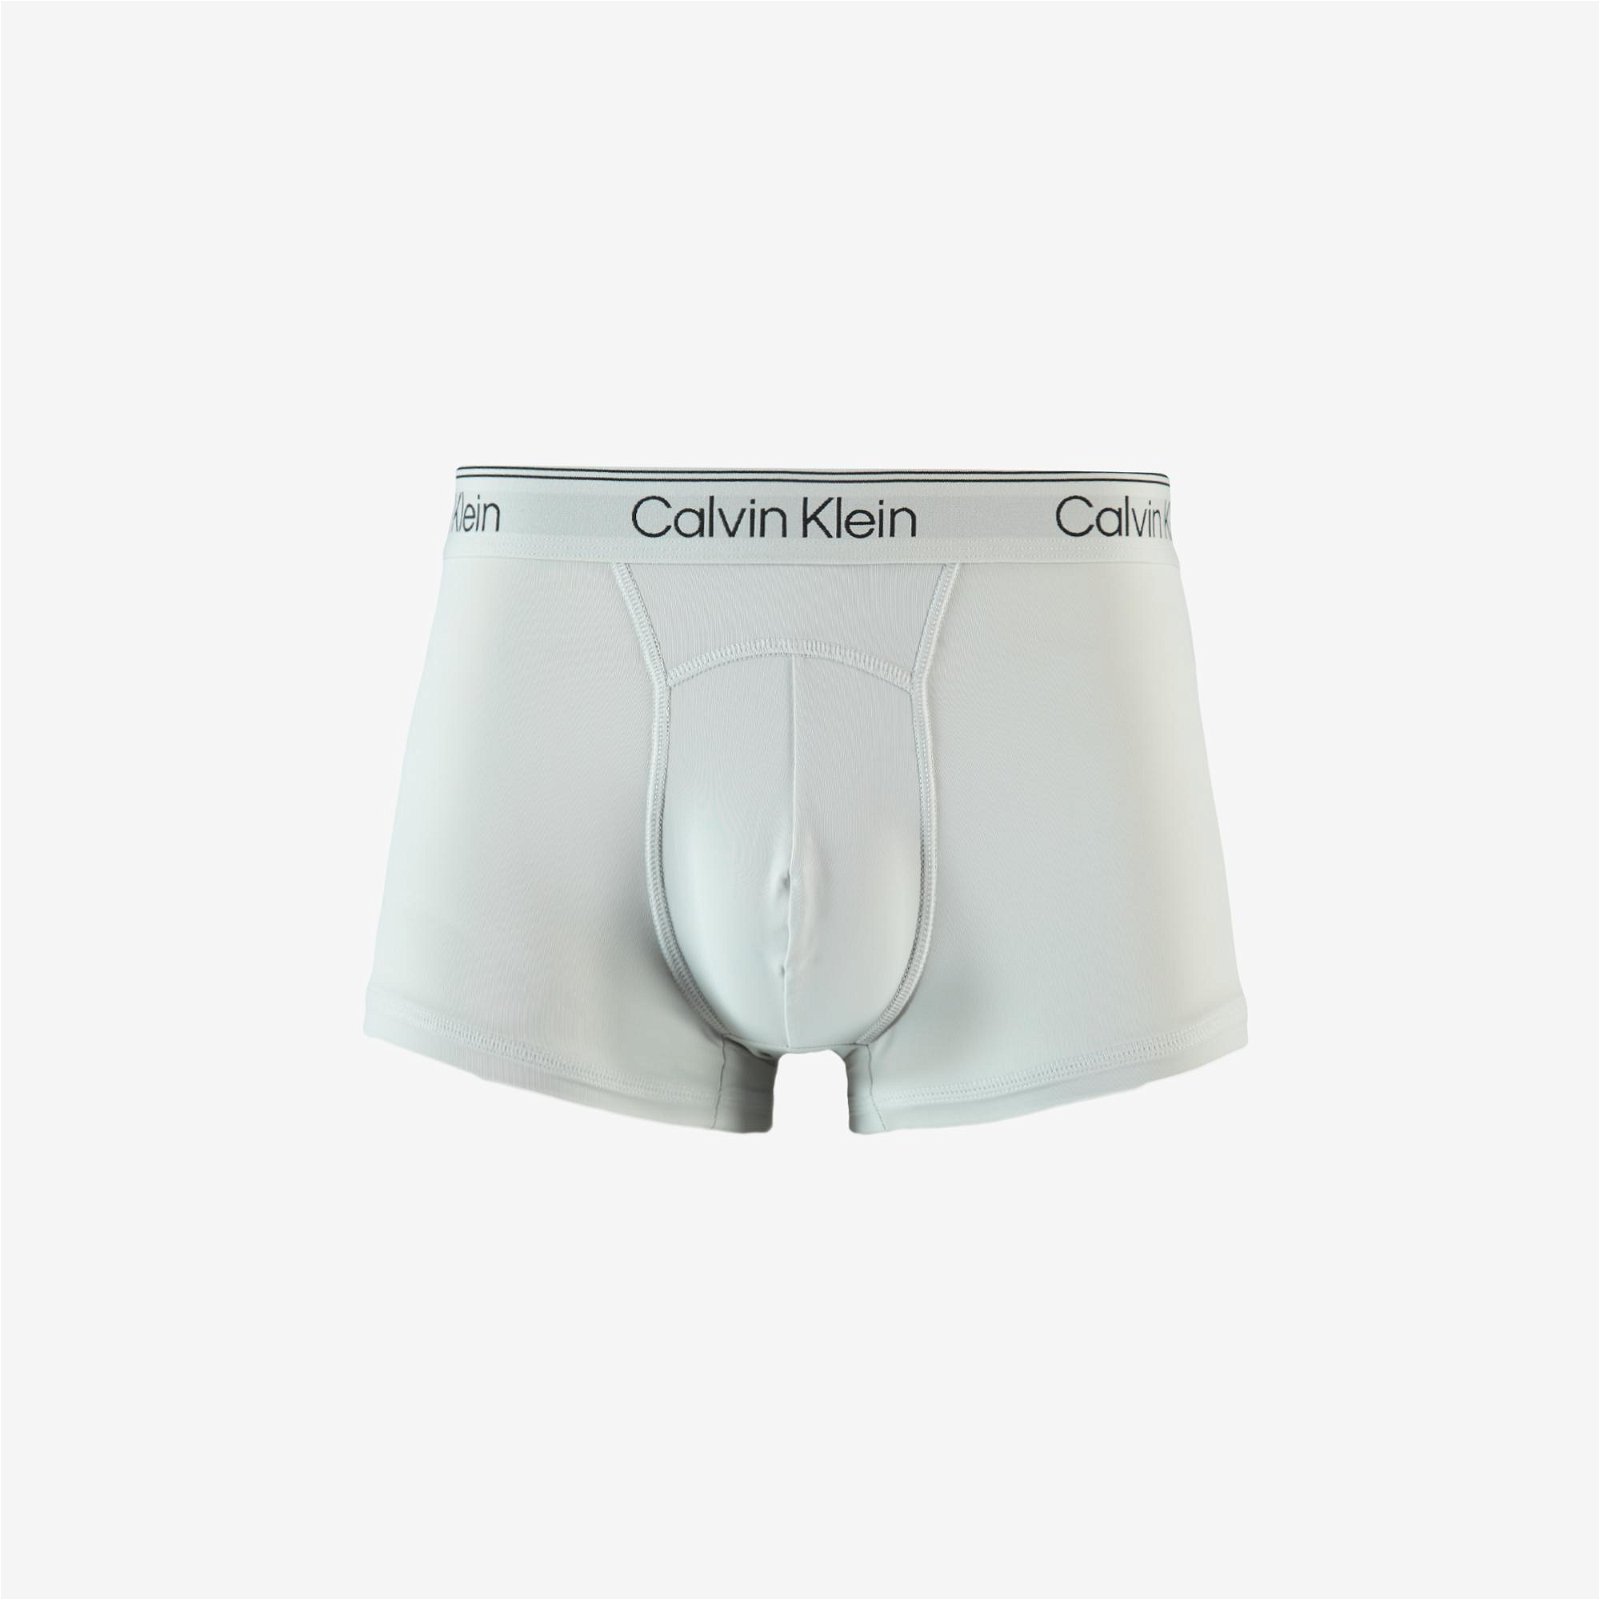 Calvin Klein 2'li Love Rise Erkek Beyaz/Yeşil Boxer